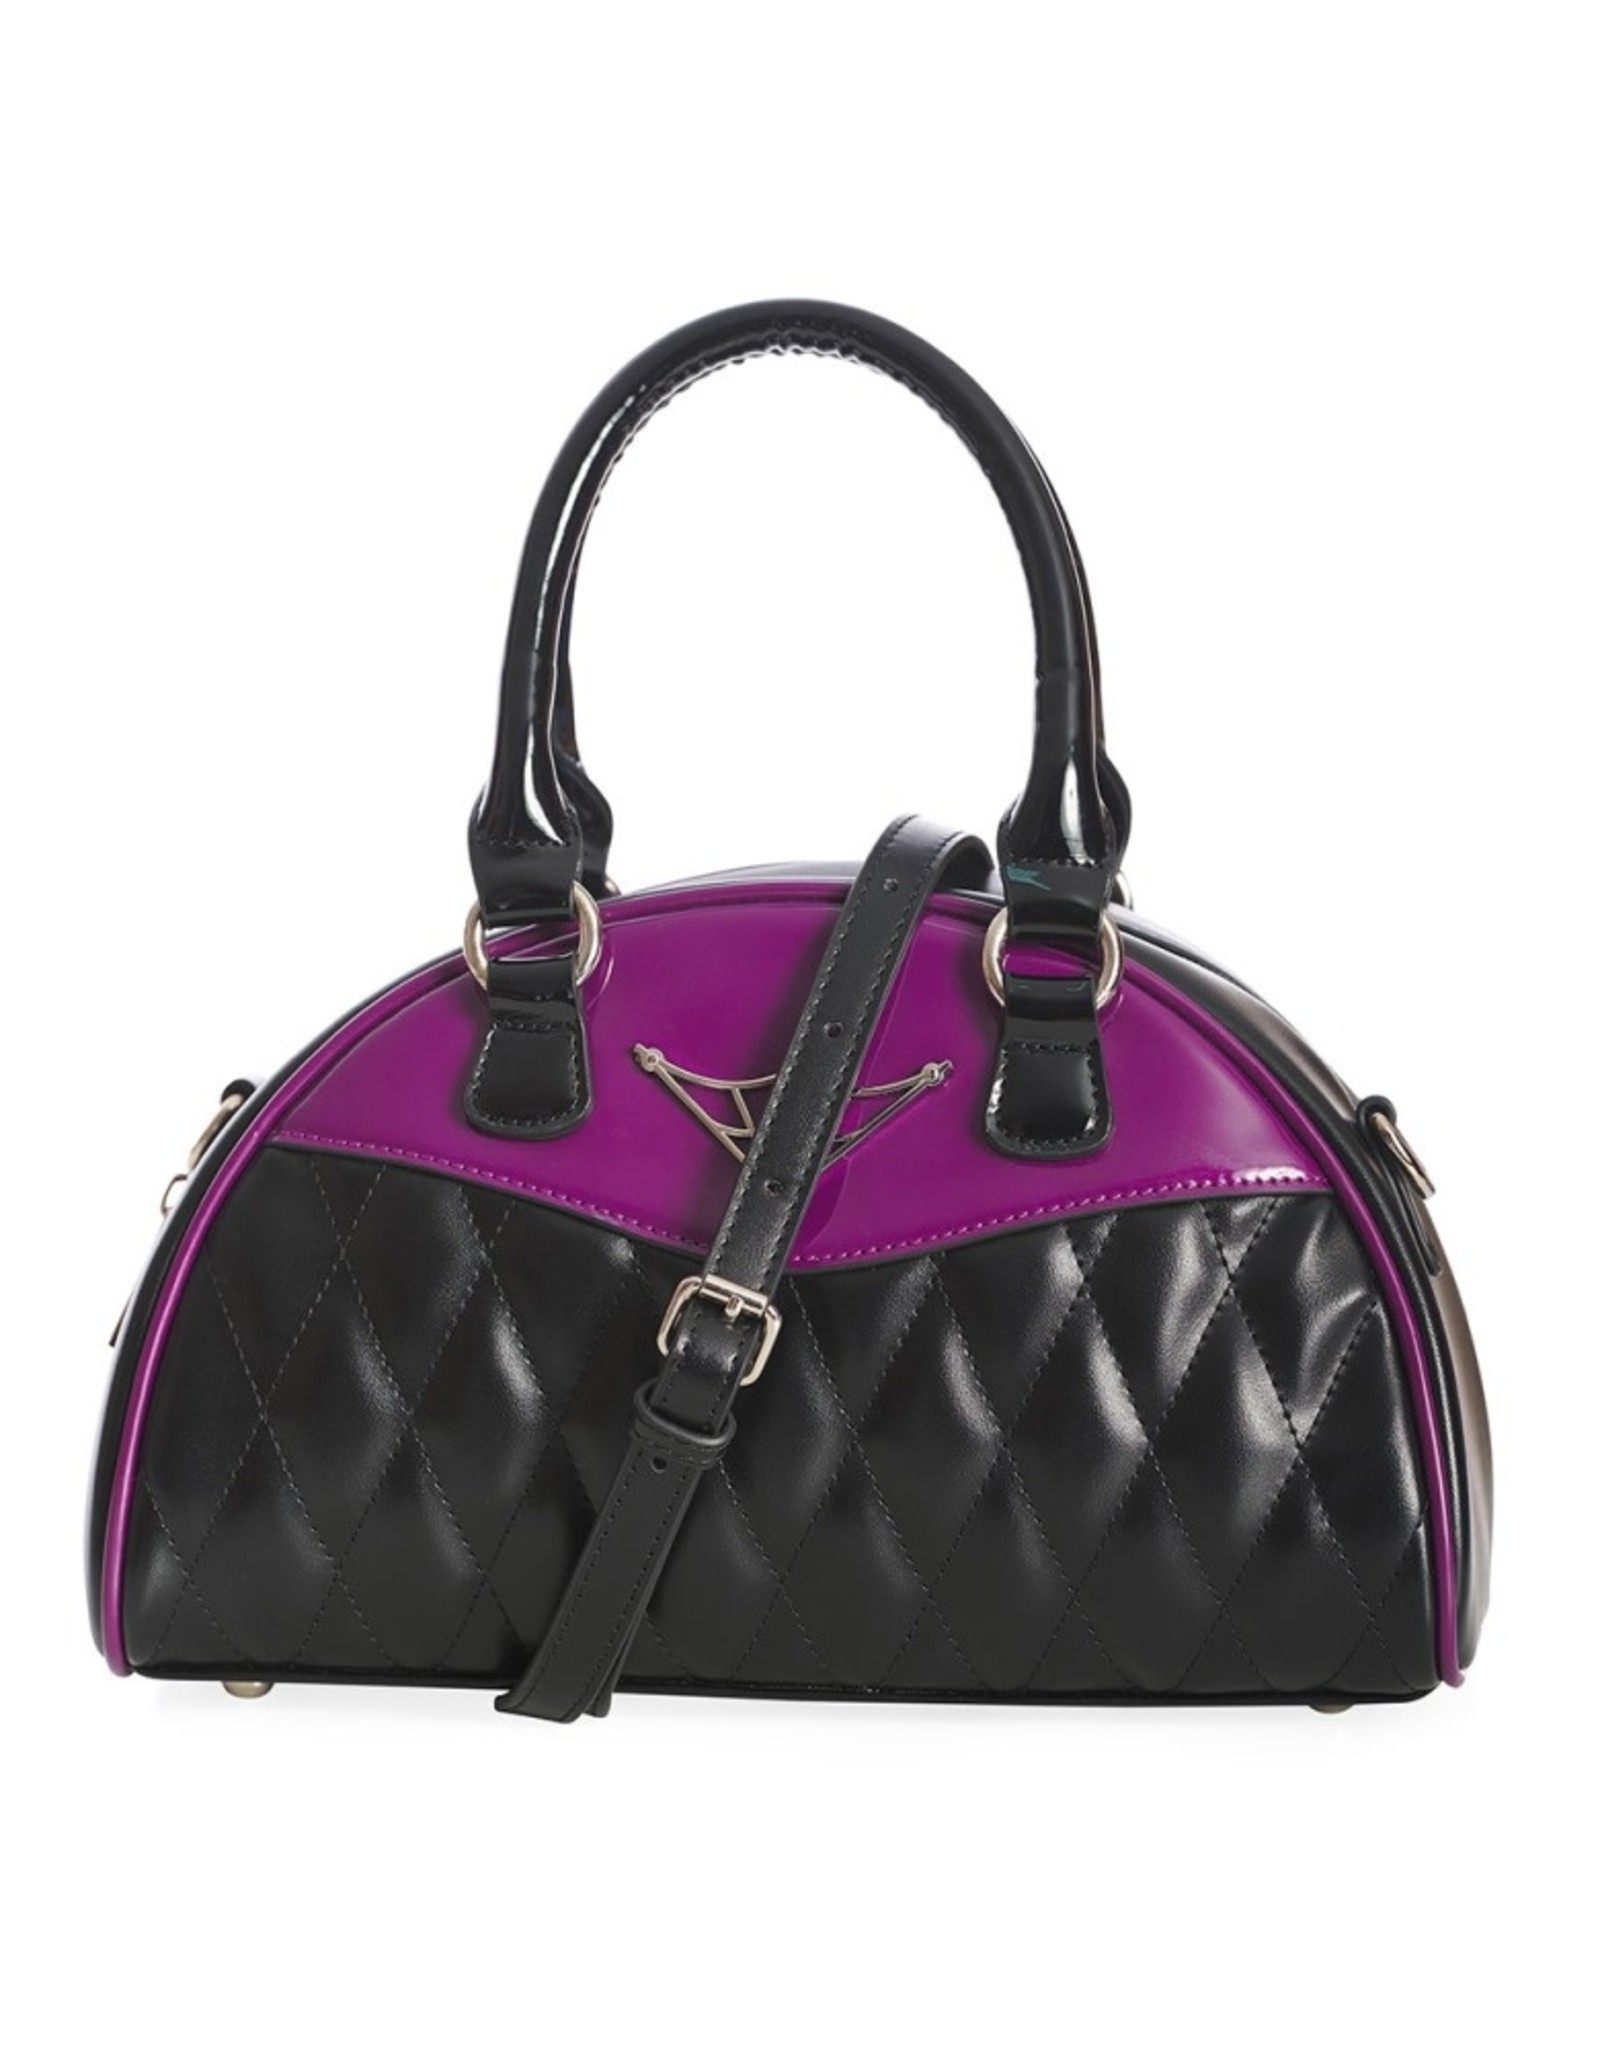 Banned Retro bags  Vintage bags - Banned Rockabilly Lillyweb Handbag purple-black